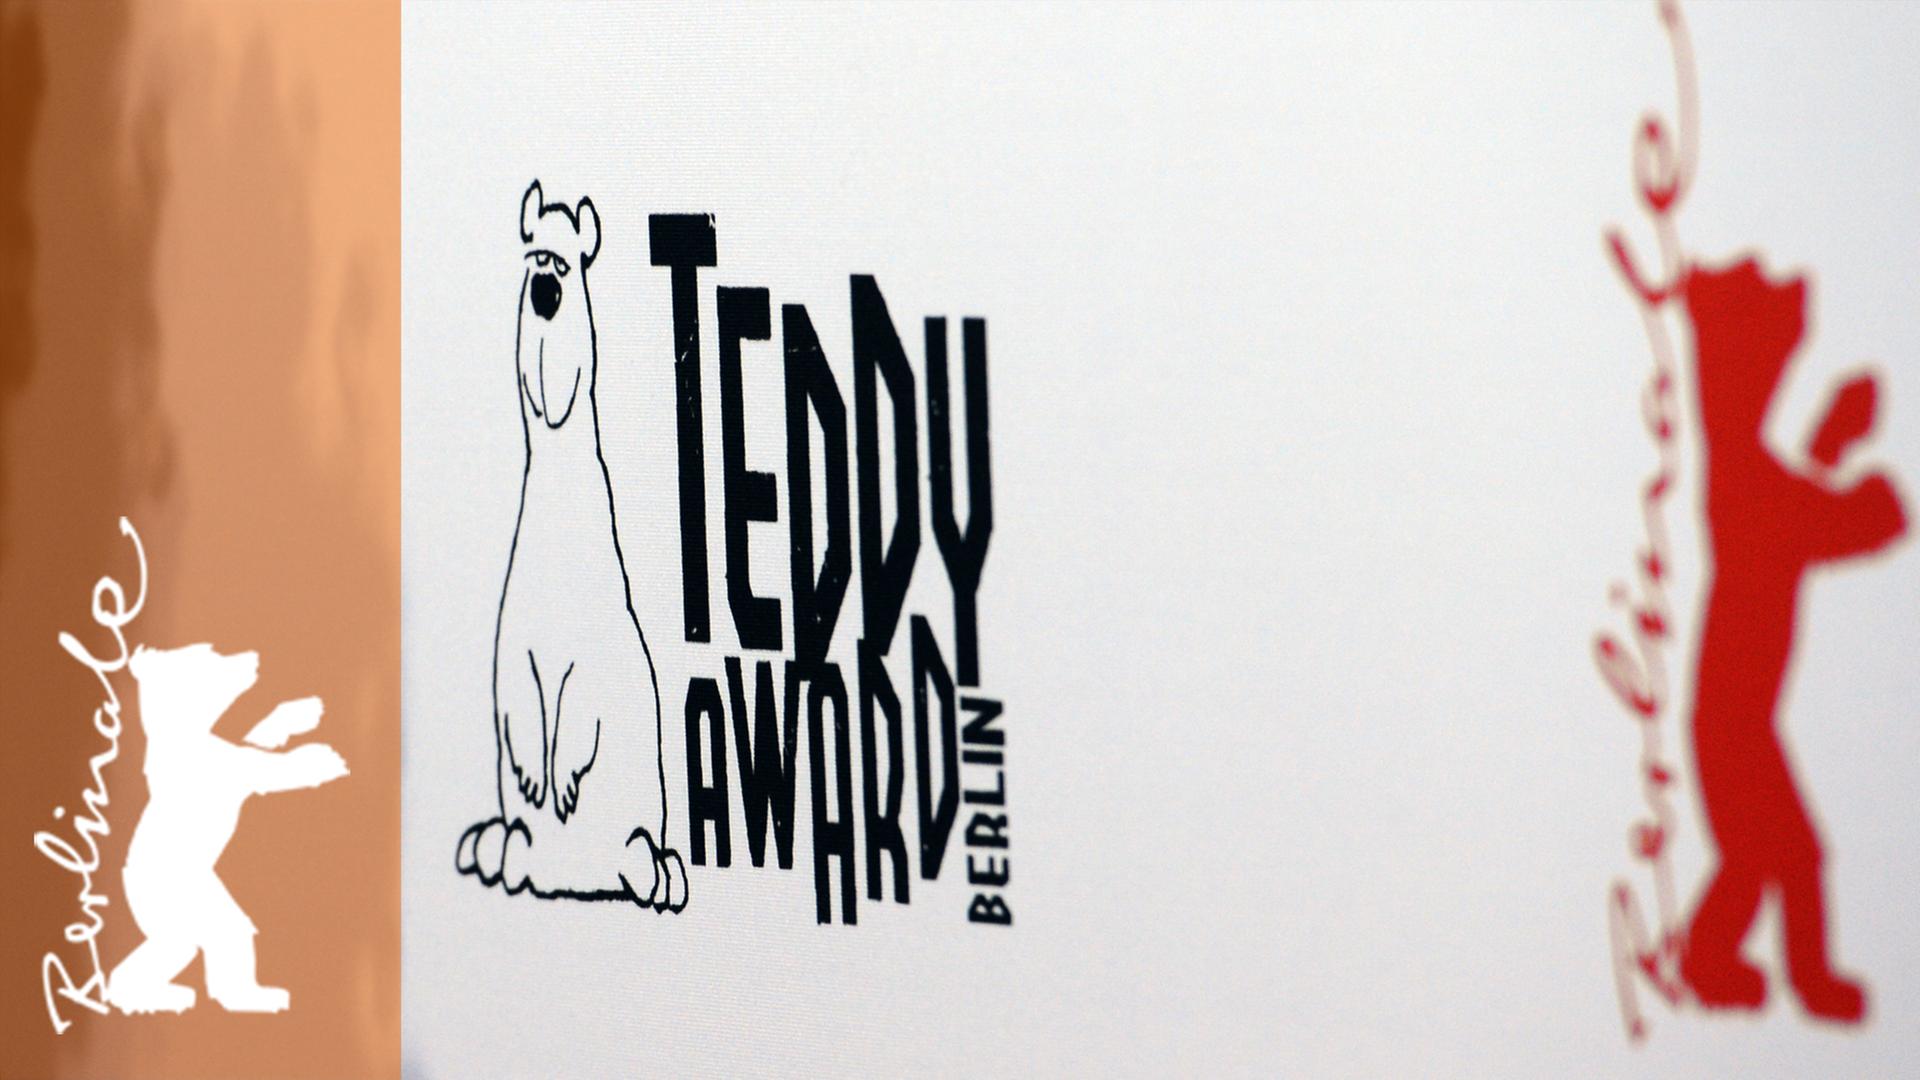 Das Logo des Teddy Award neben dem Berlinale-Logo